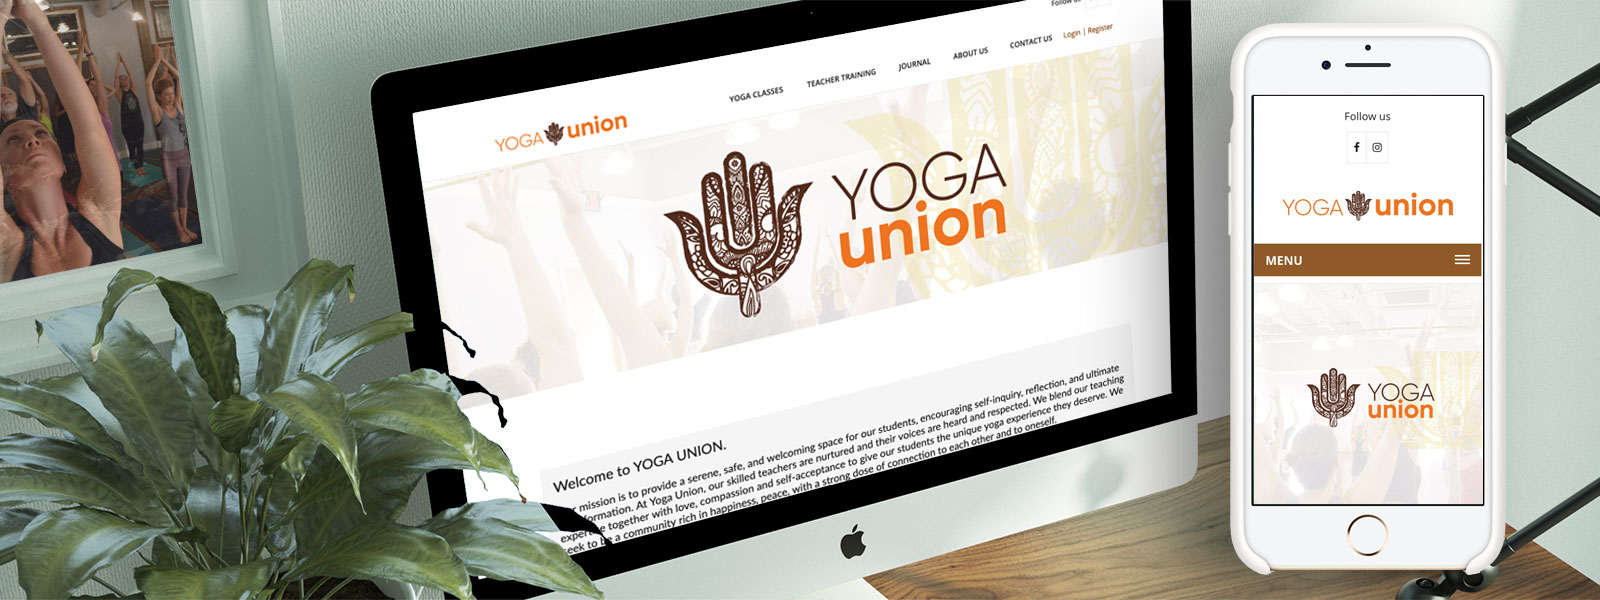 Yoga Union website